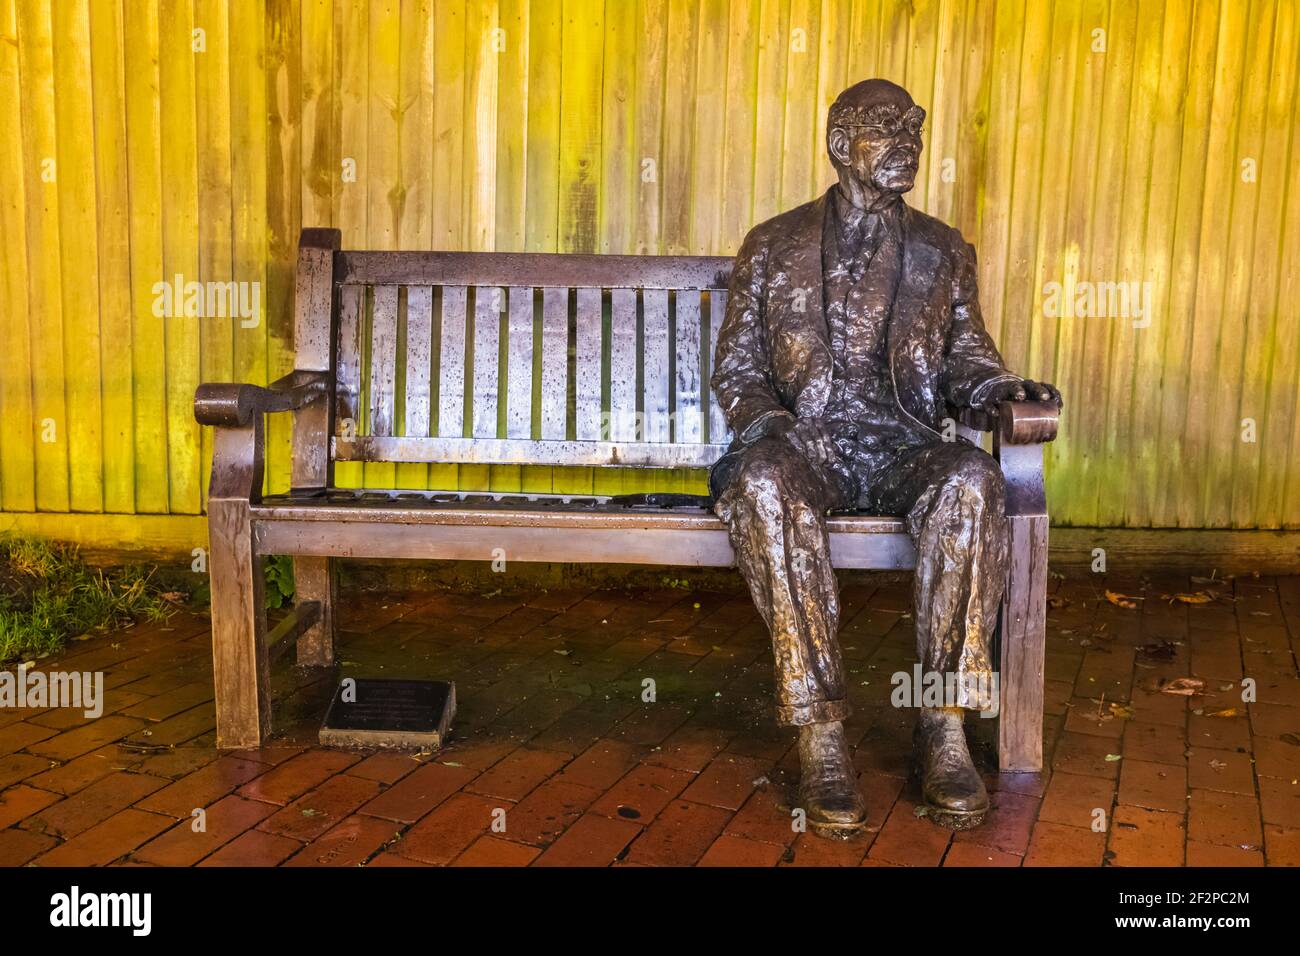 England, East Sussex, Burwash, The Seated Statue of Rudyard Kipling in Burwash High Street Stock Photo